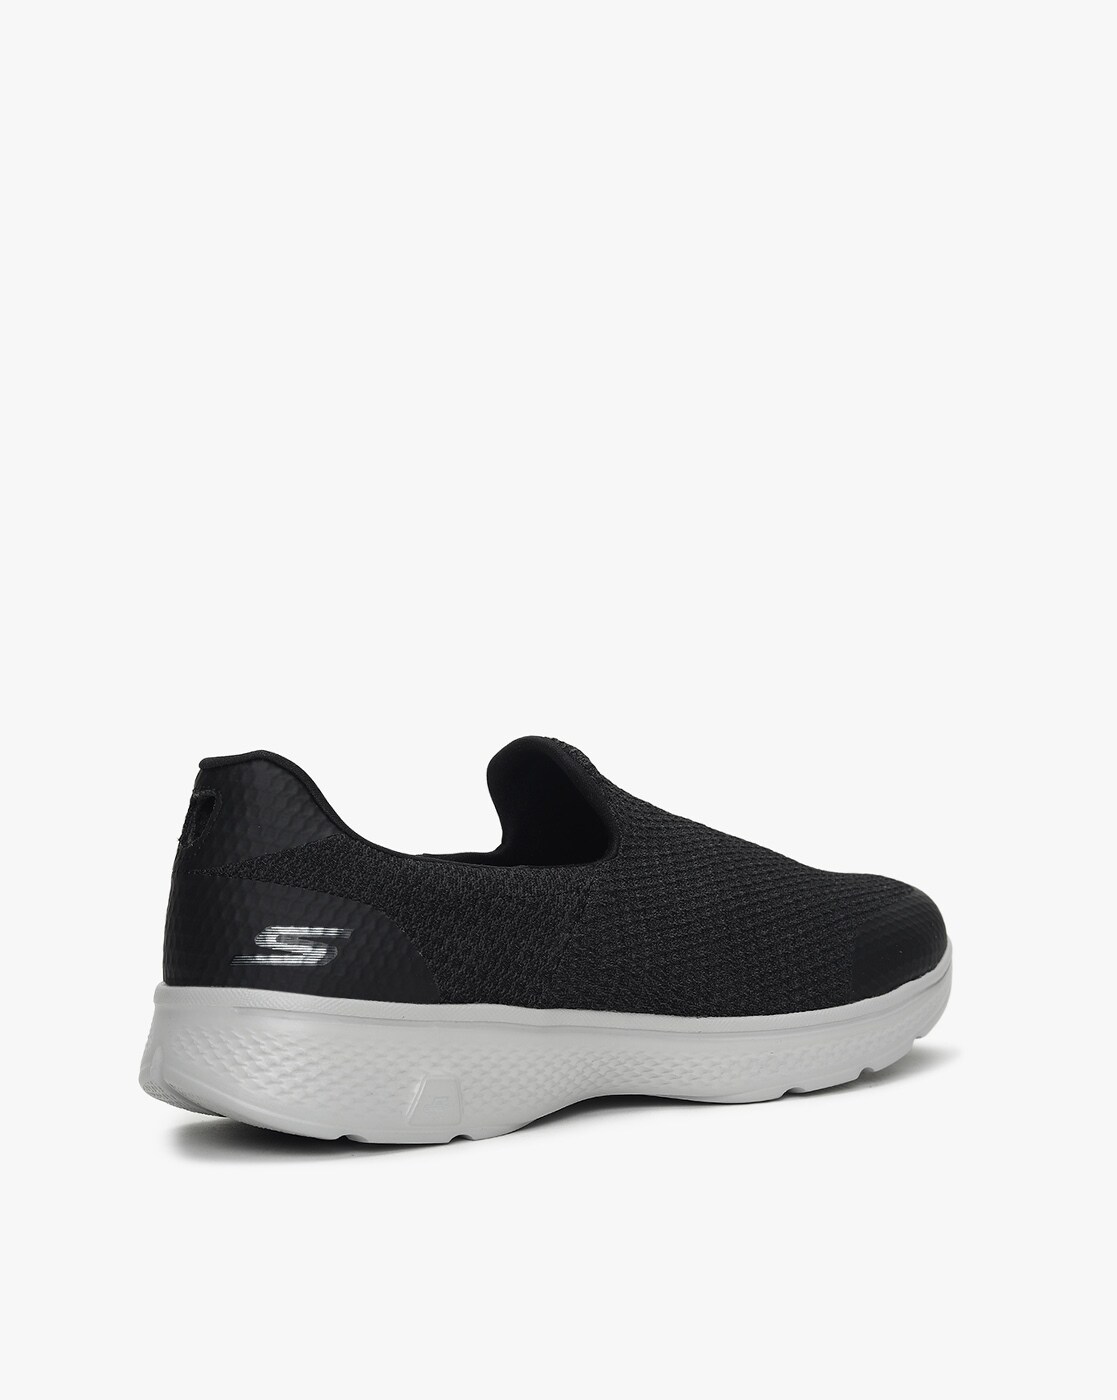 Black Sports Shoes for Men by Skechers Online